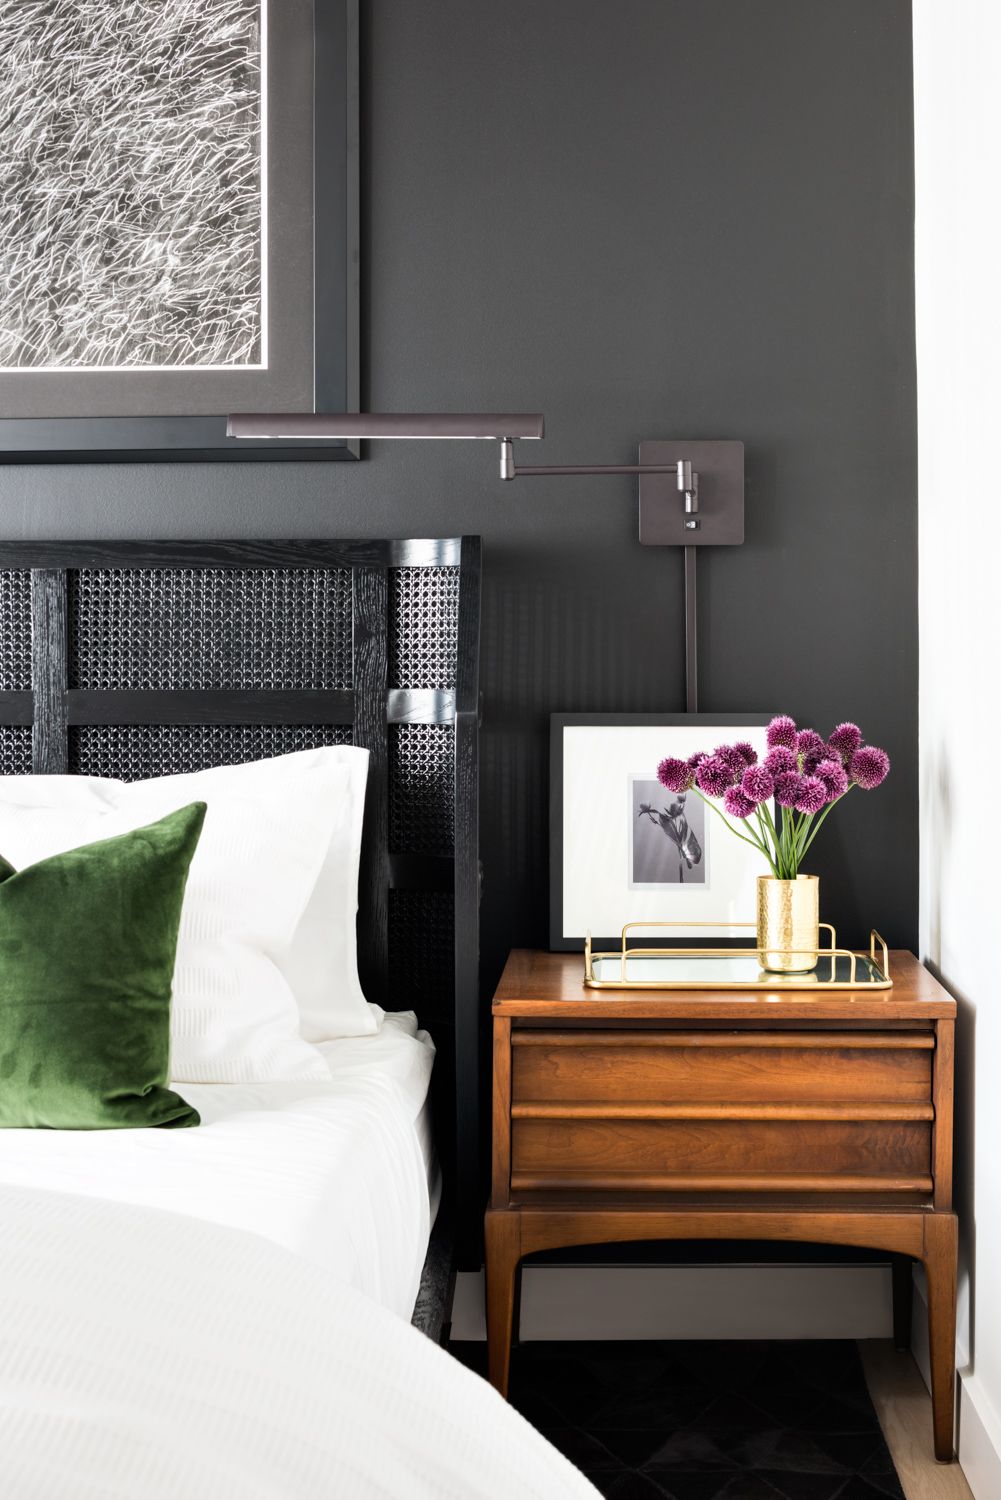 40 easy bedroom makeover ideas - diy master bedroom decor on